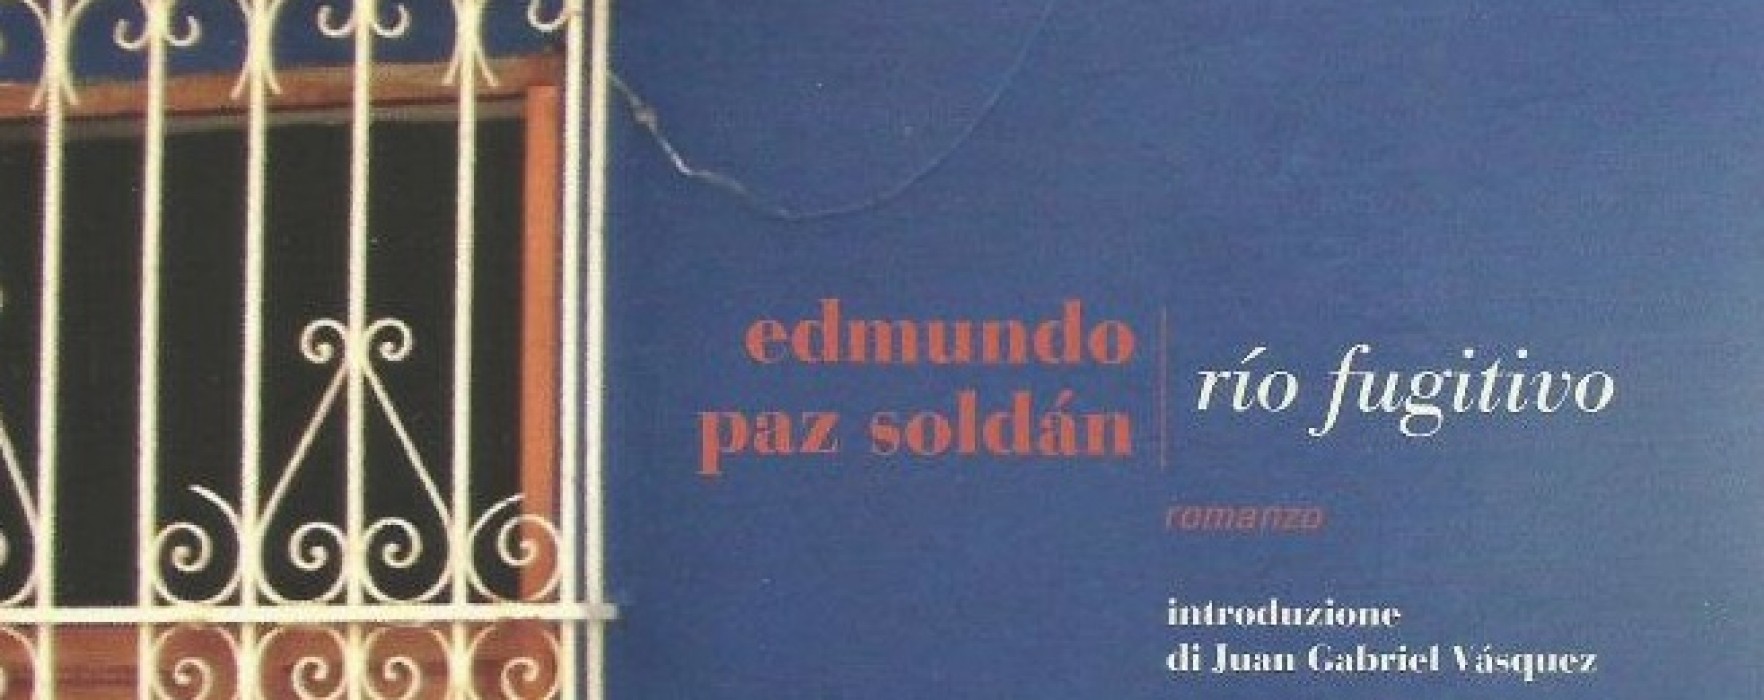 “Río Fugitivo” di Edmundo Paz Soldán